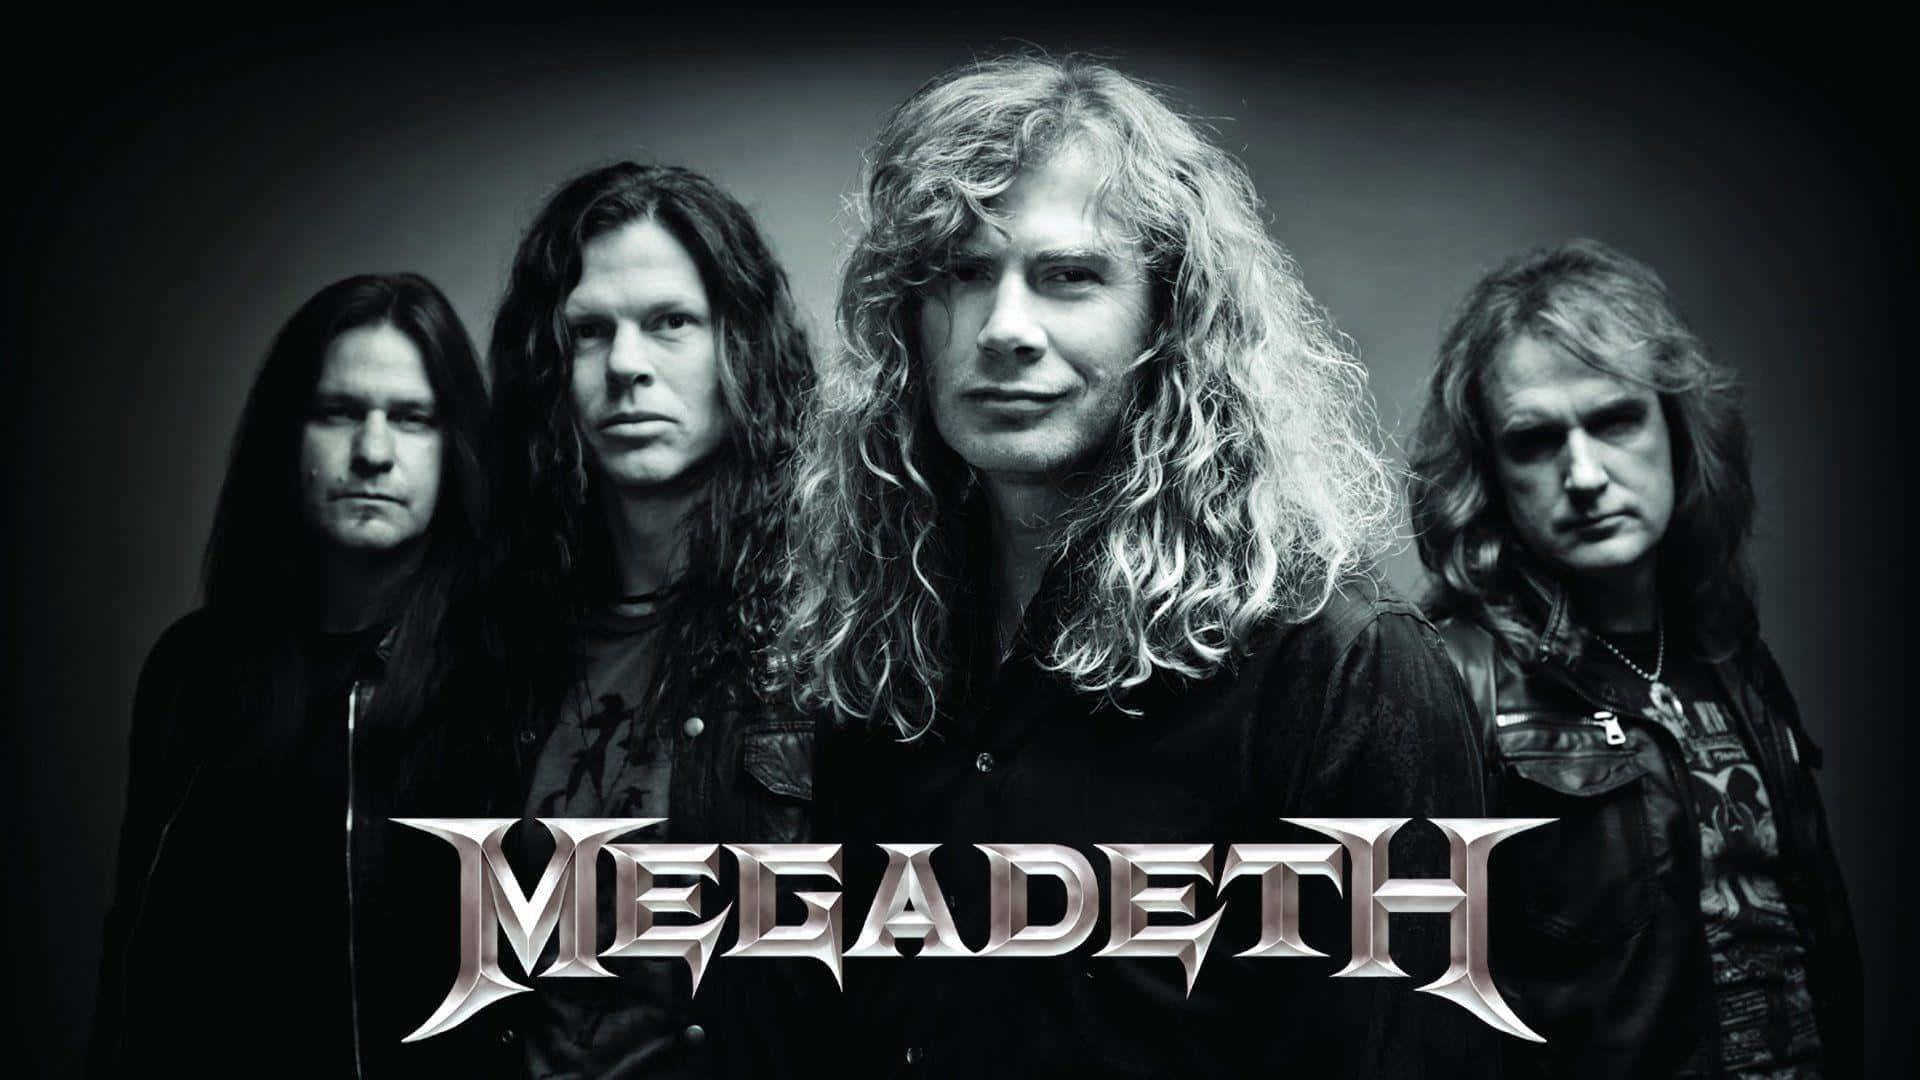 Megadeth Band Portrait Blackand White Wallpaper